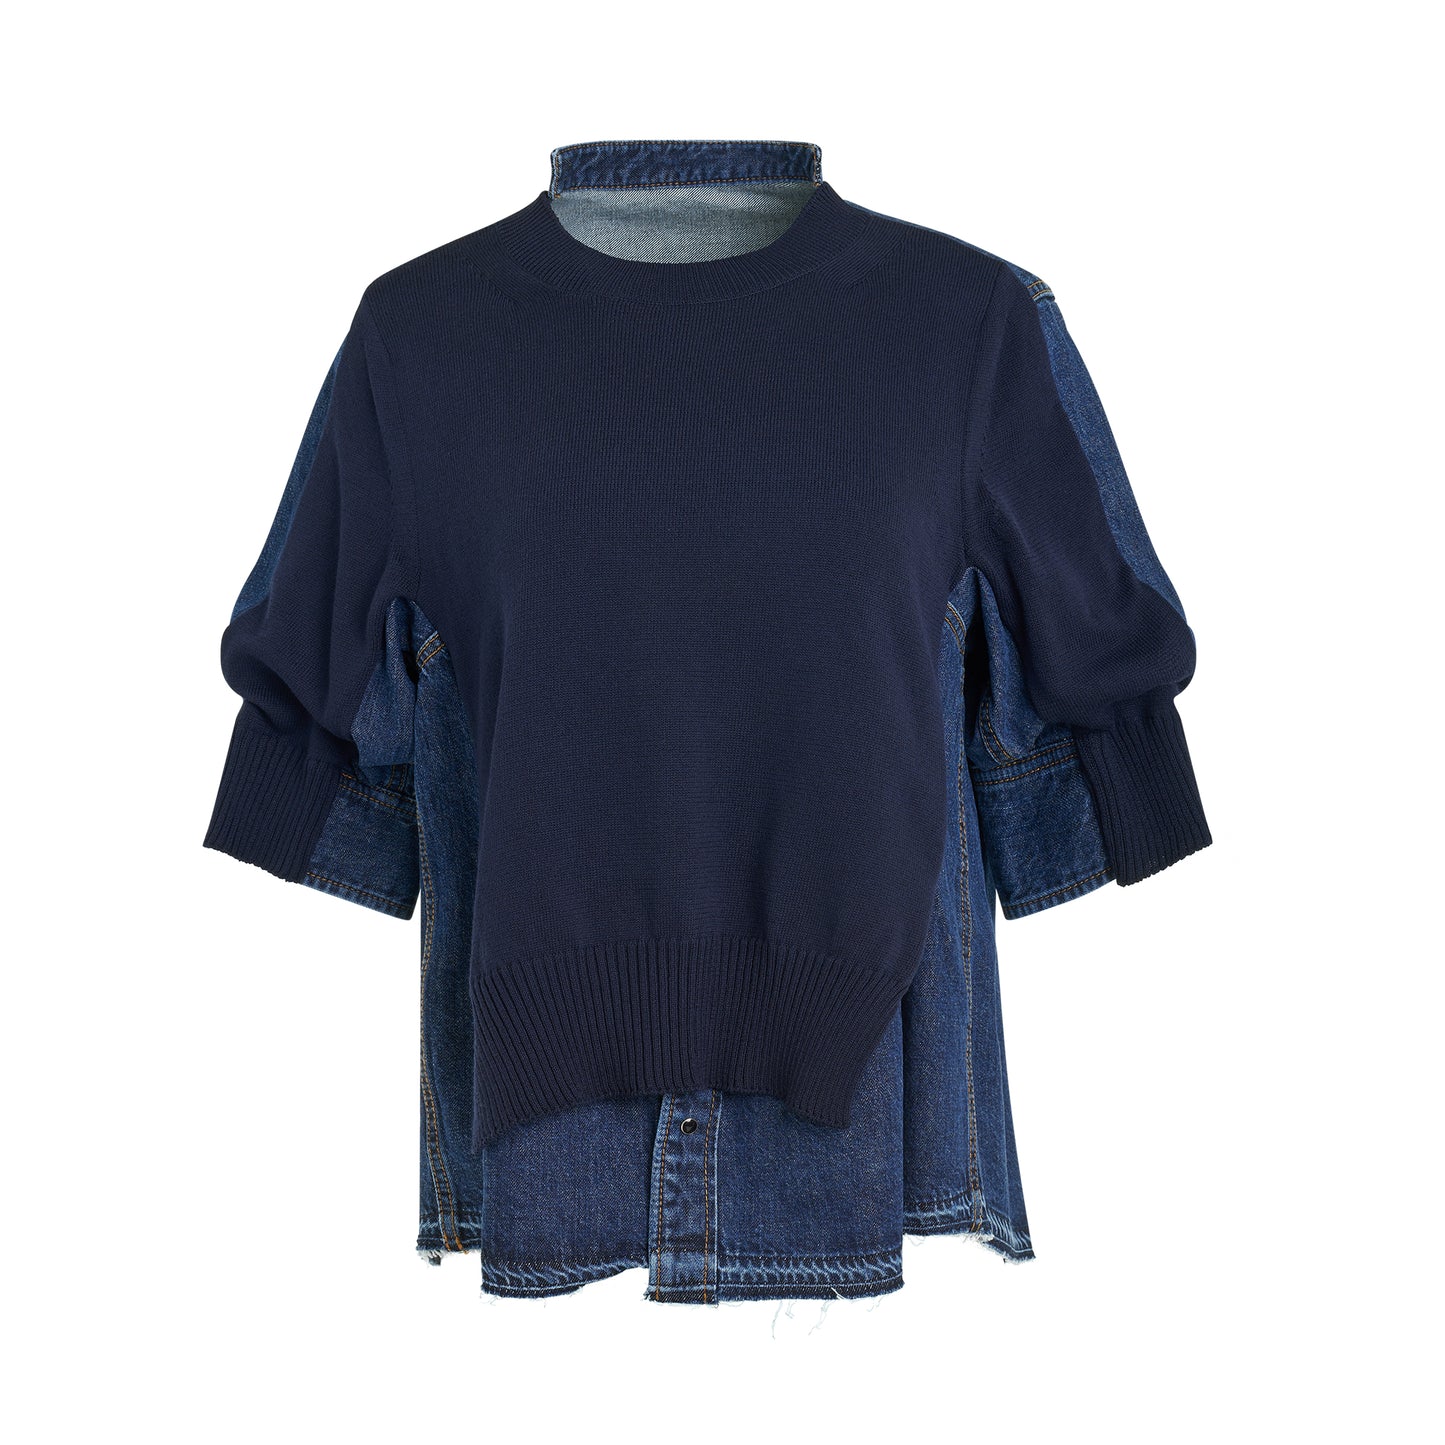 Denim x Knit Sweater in Navy Blue